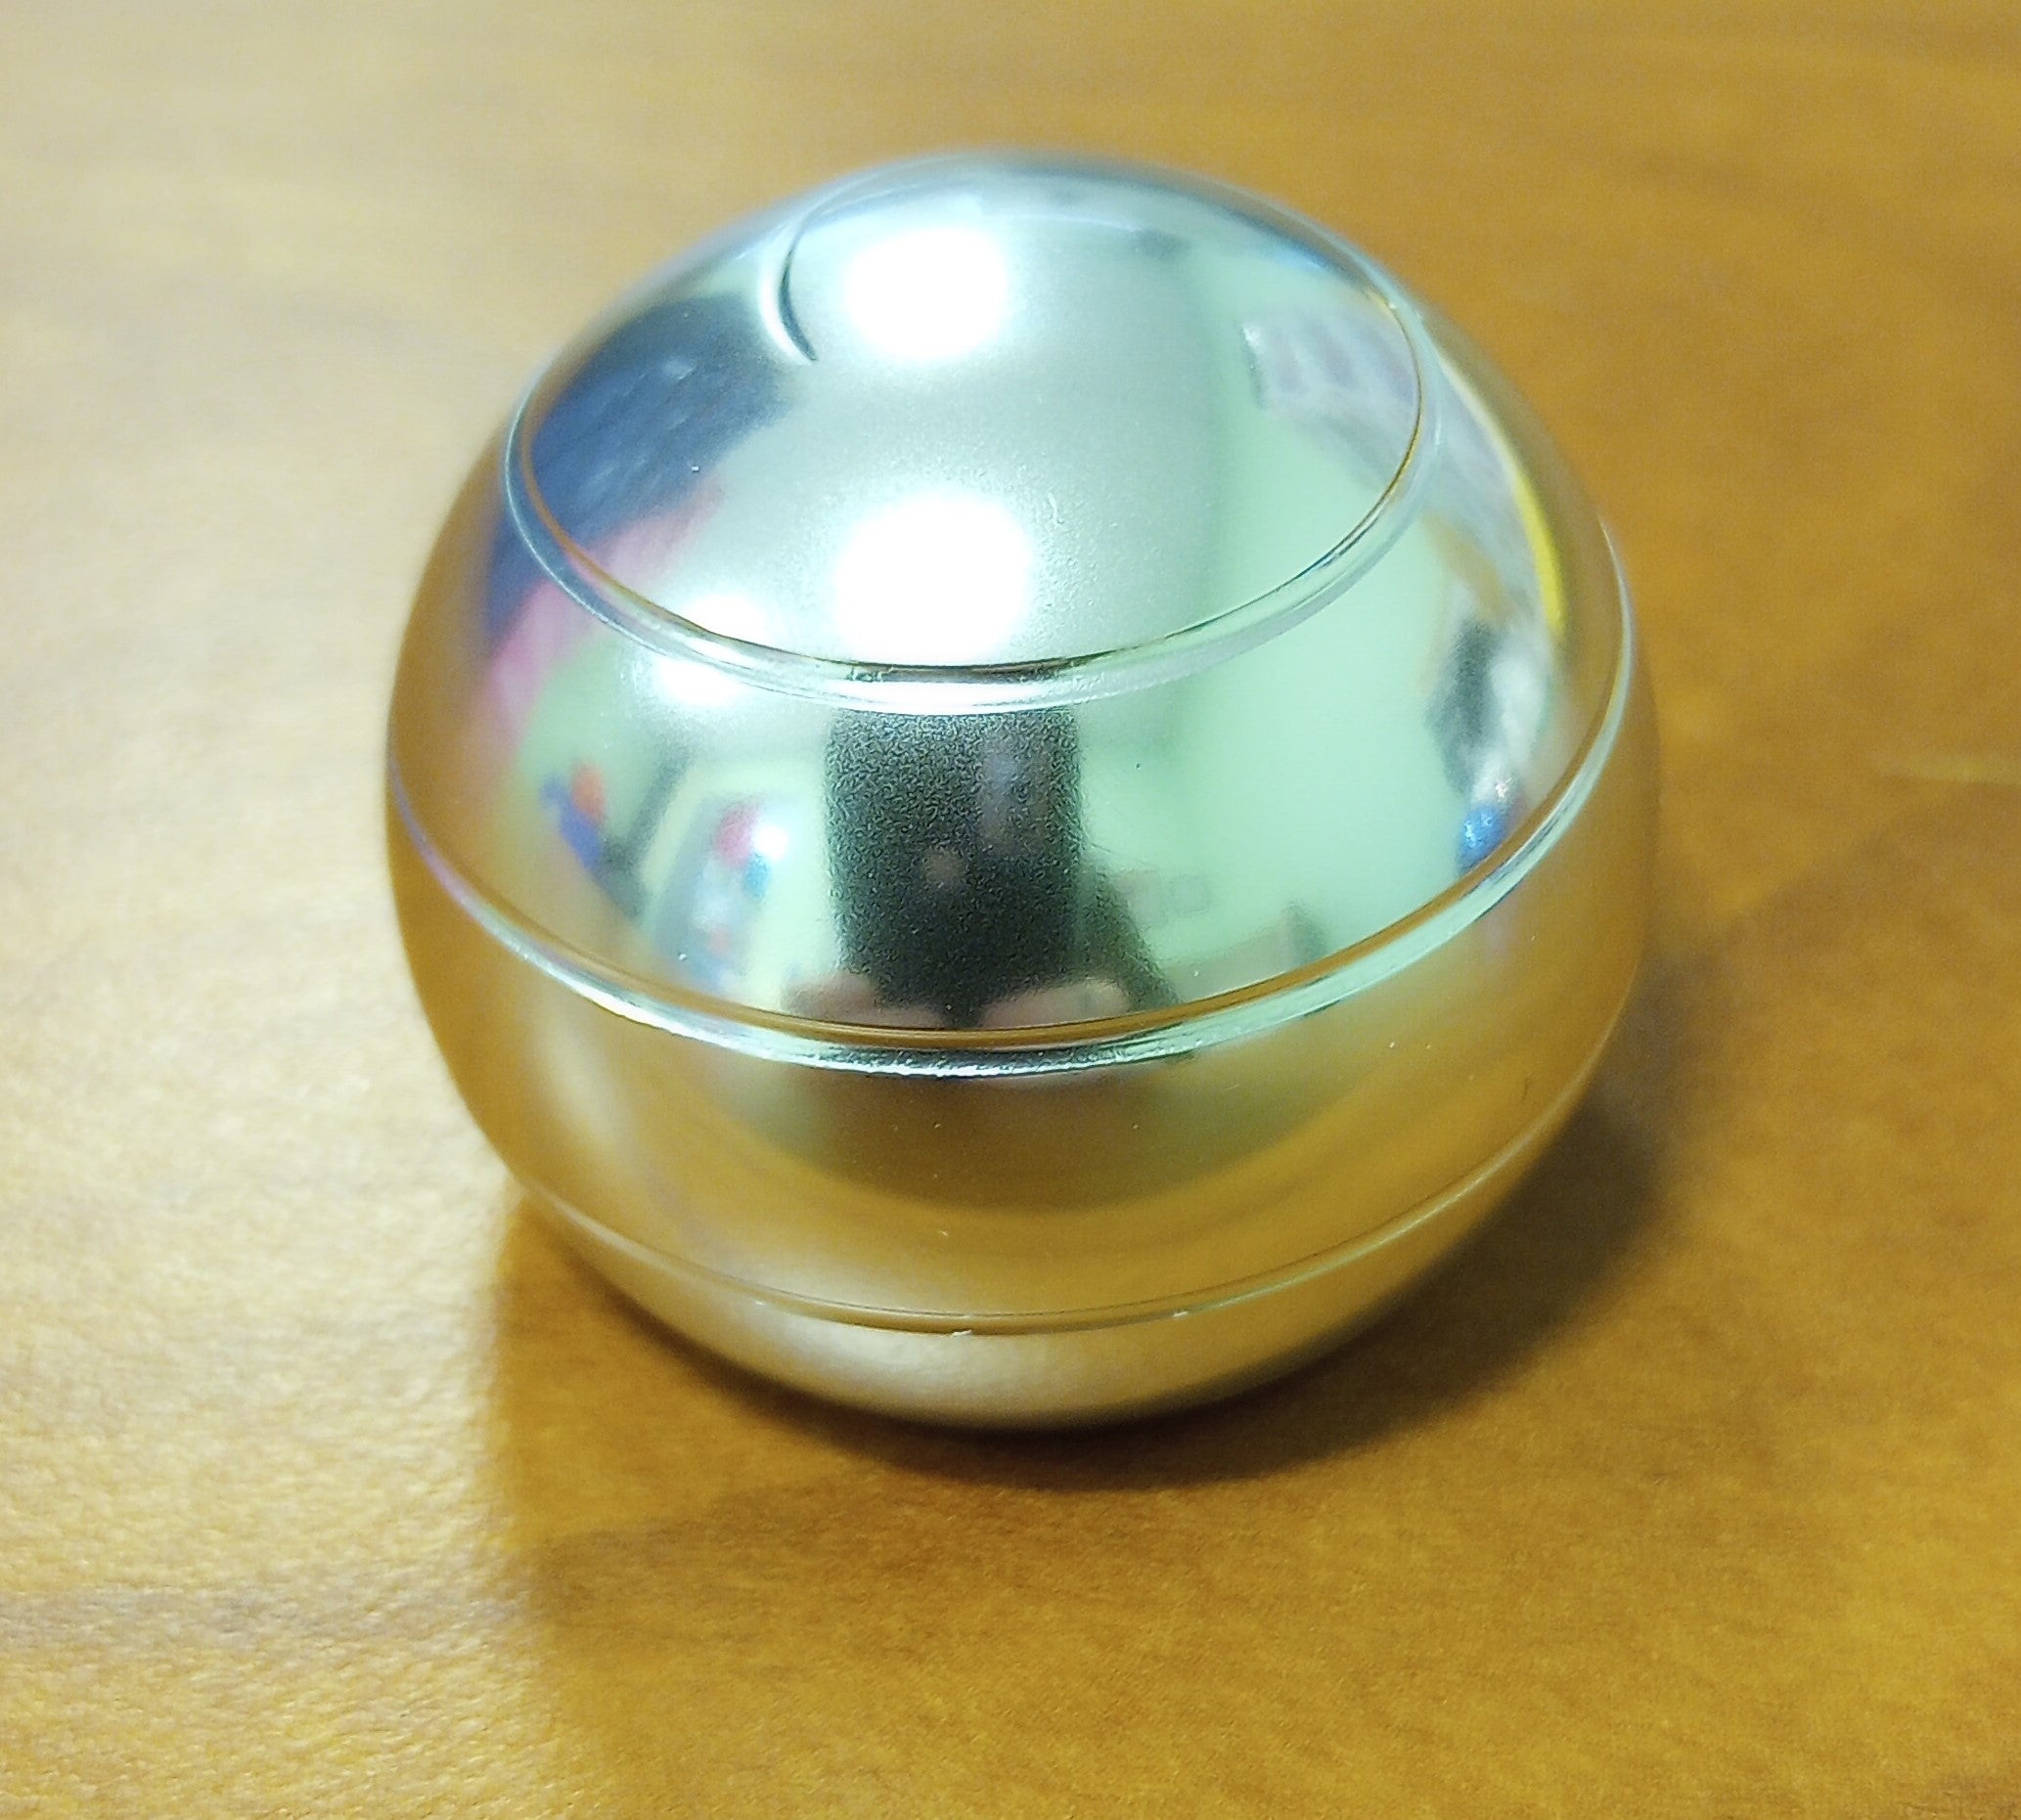 The Silver Spinnning Desktop Gyroscope.